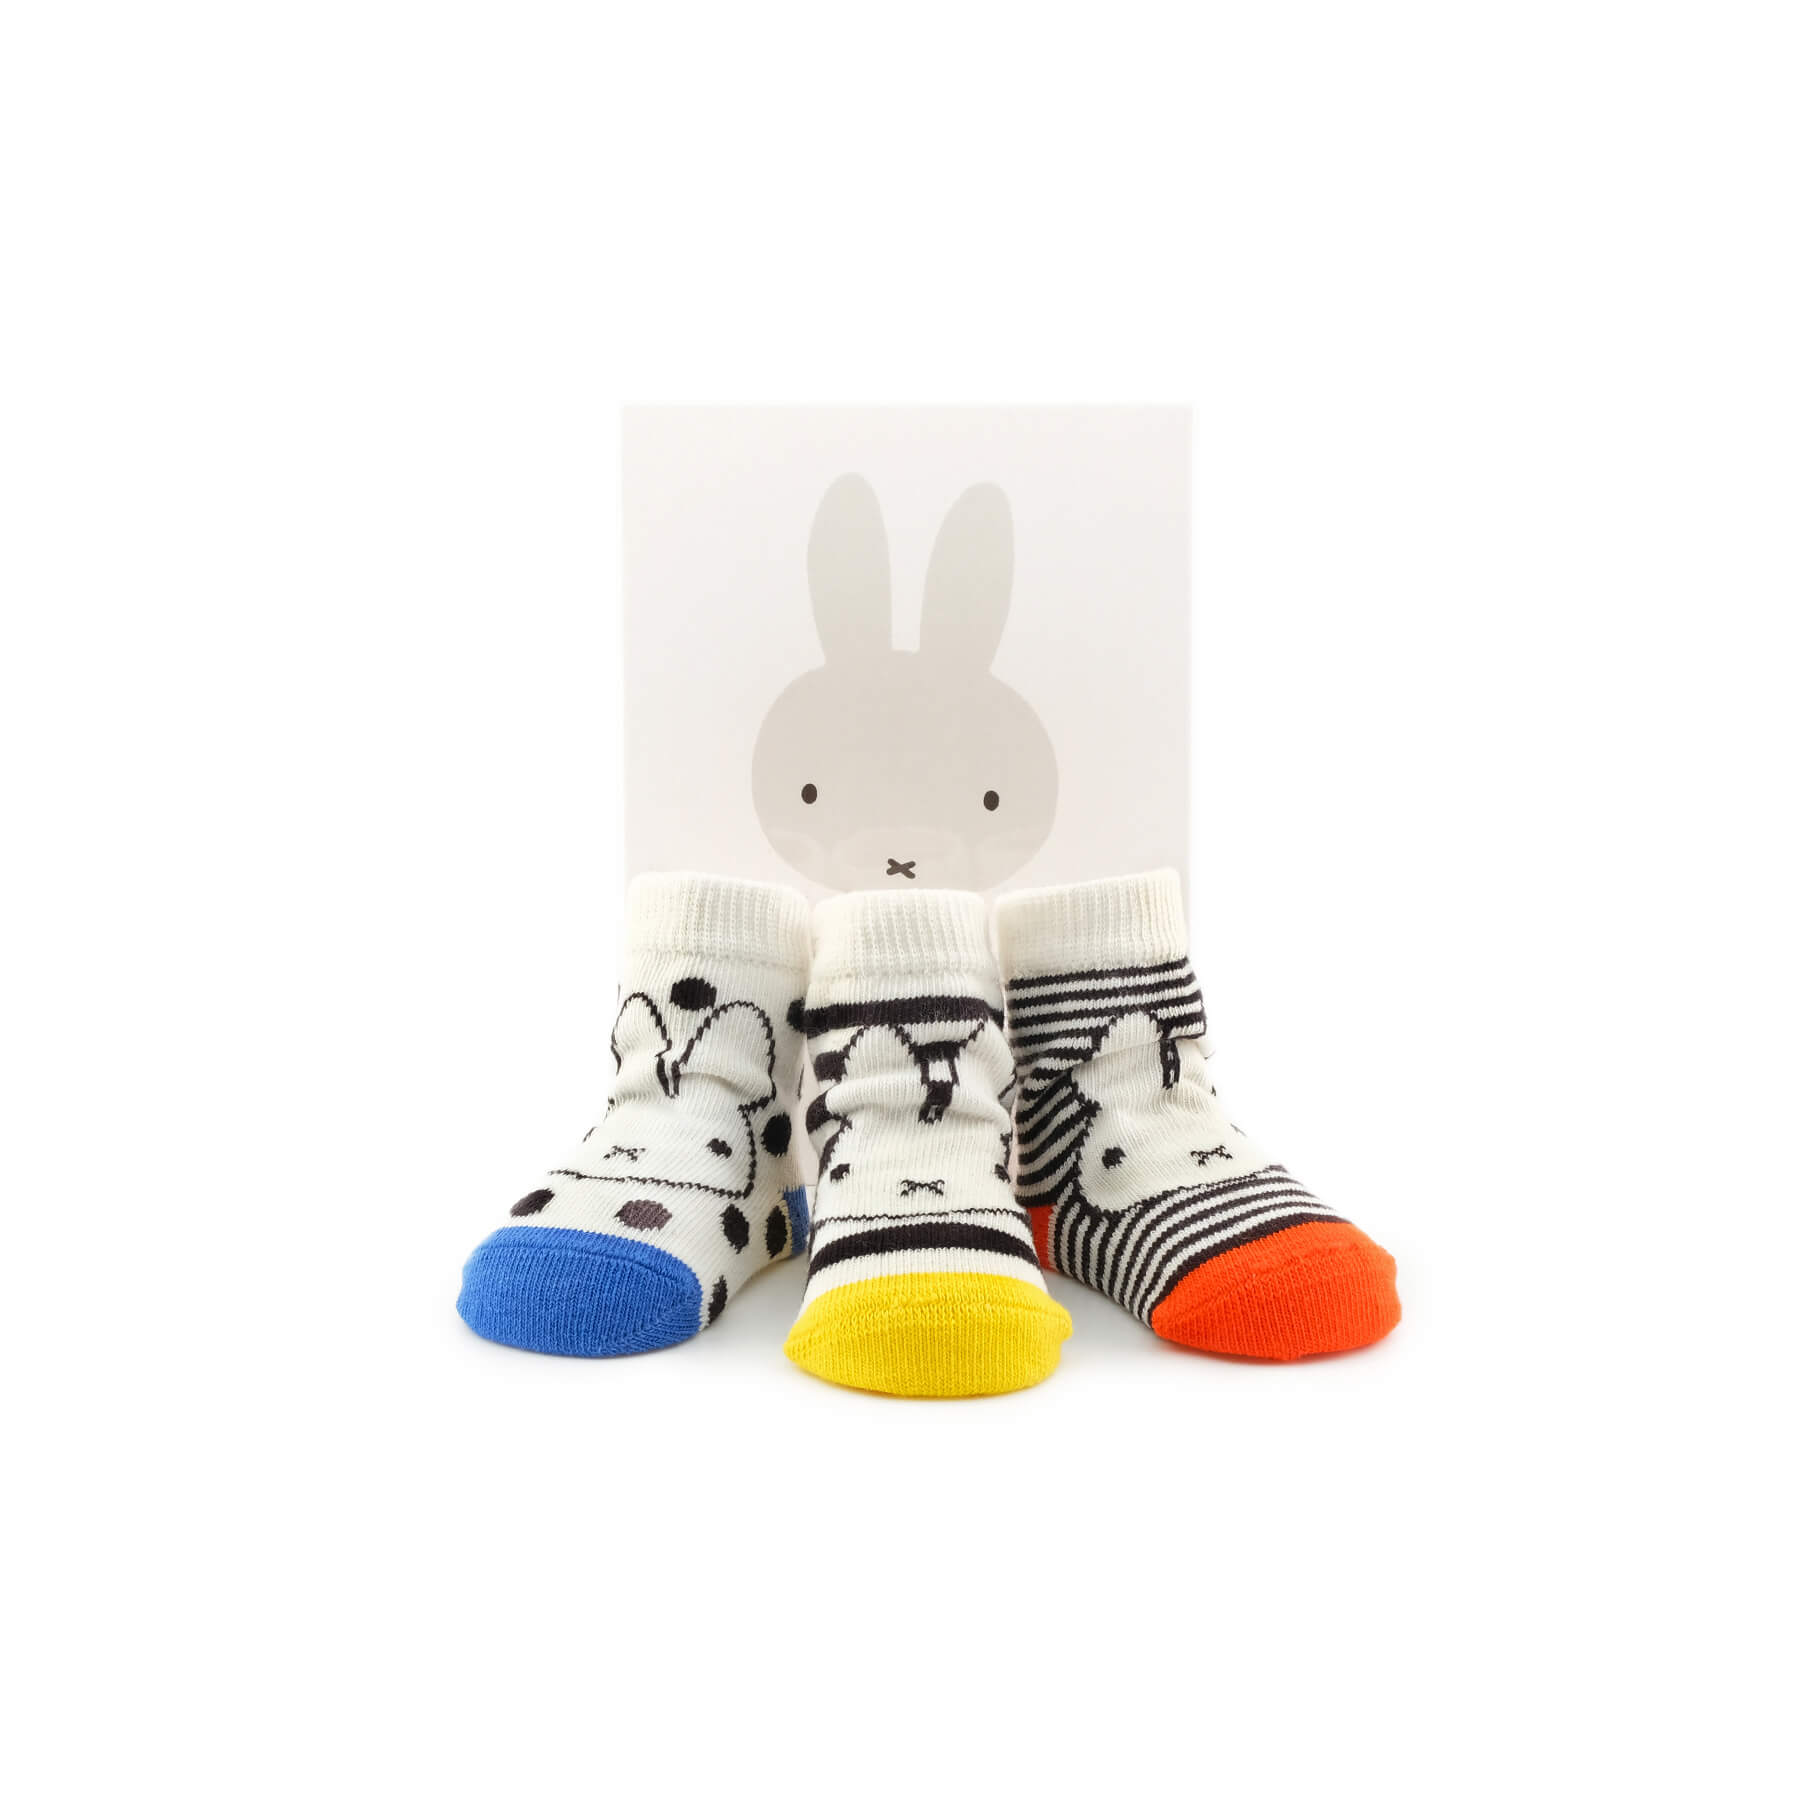 Baby Socks - Miffy x Etiquette Classic Baby Socks Gift Box - nijntje colorful baby socks - main view⎪Lil'Etiquette Clothiers